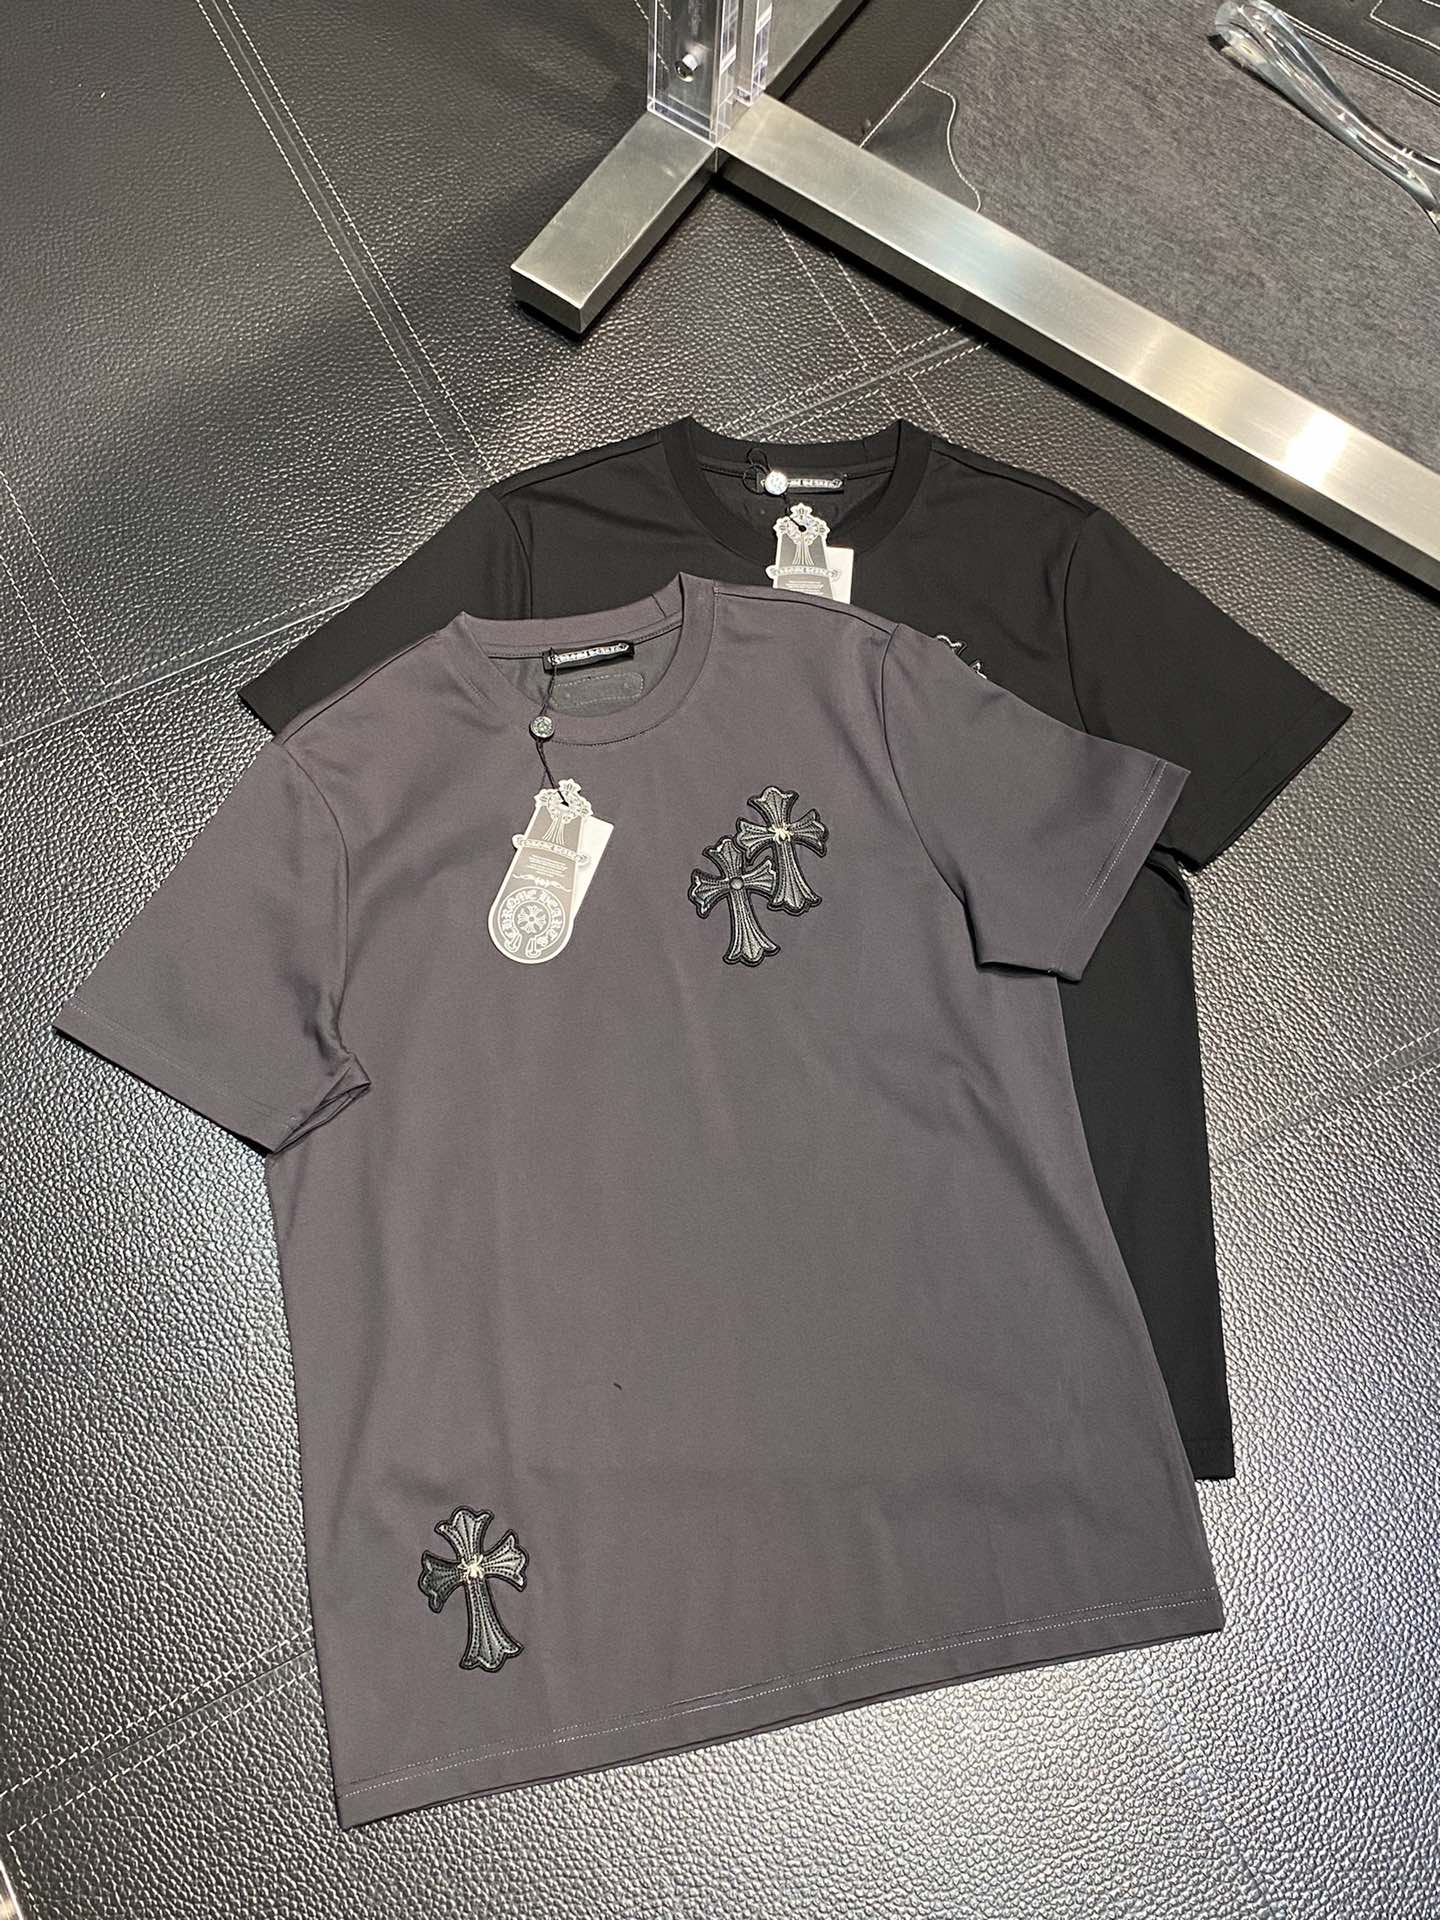 Chrome Hearts Clothing T-Shirt Men Fashion Short Sleeve